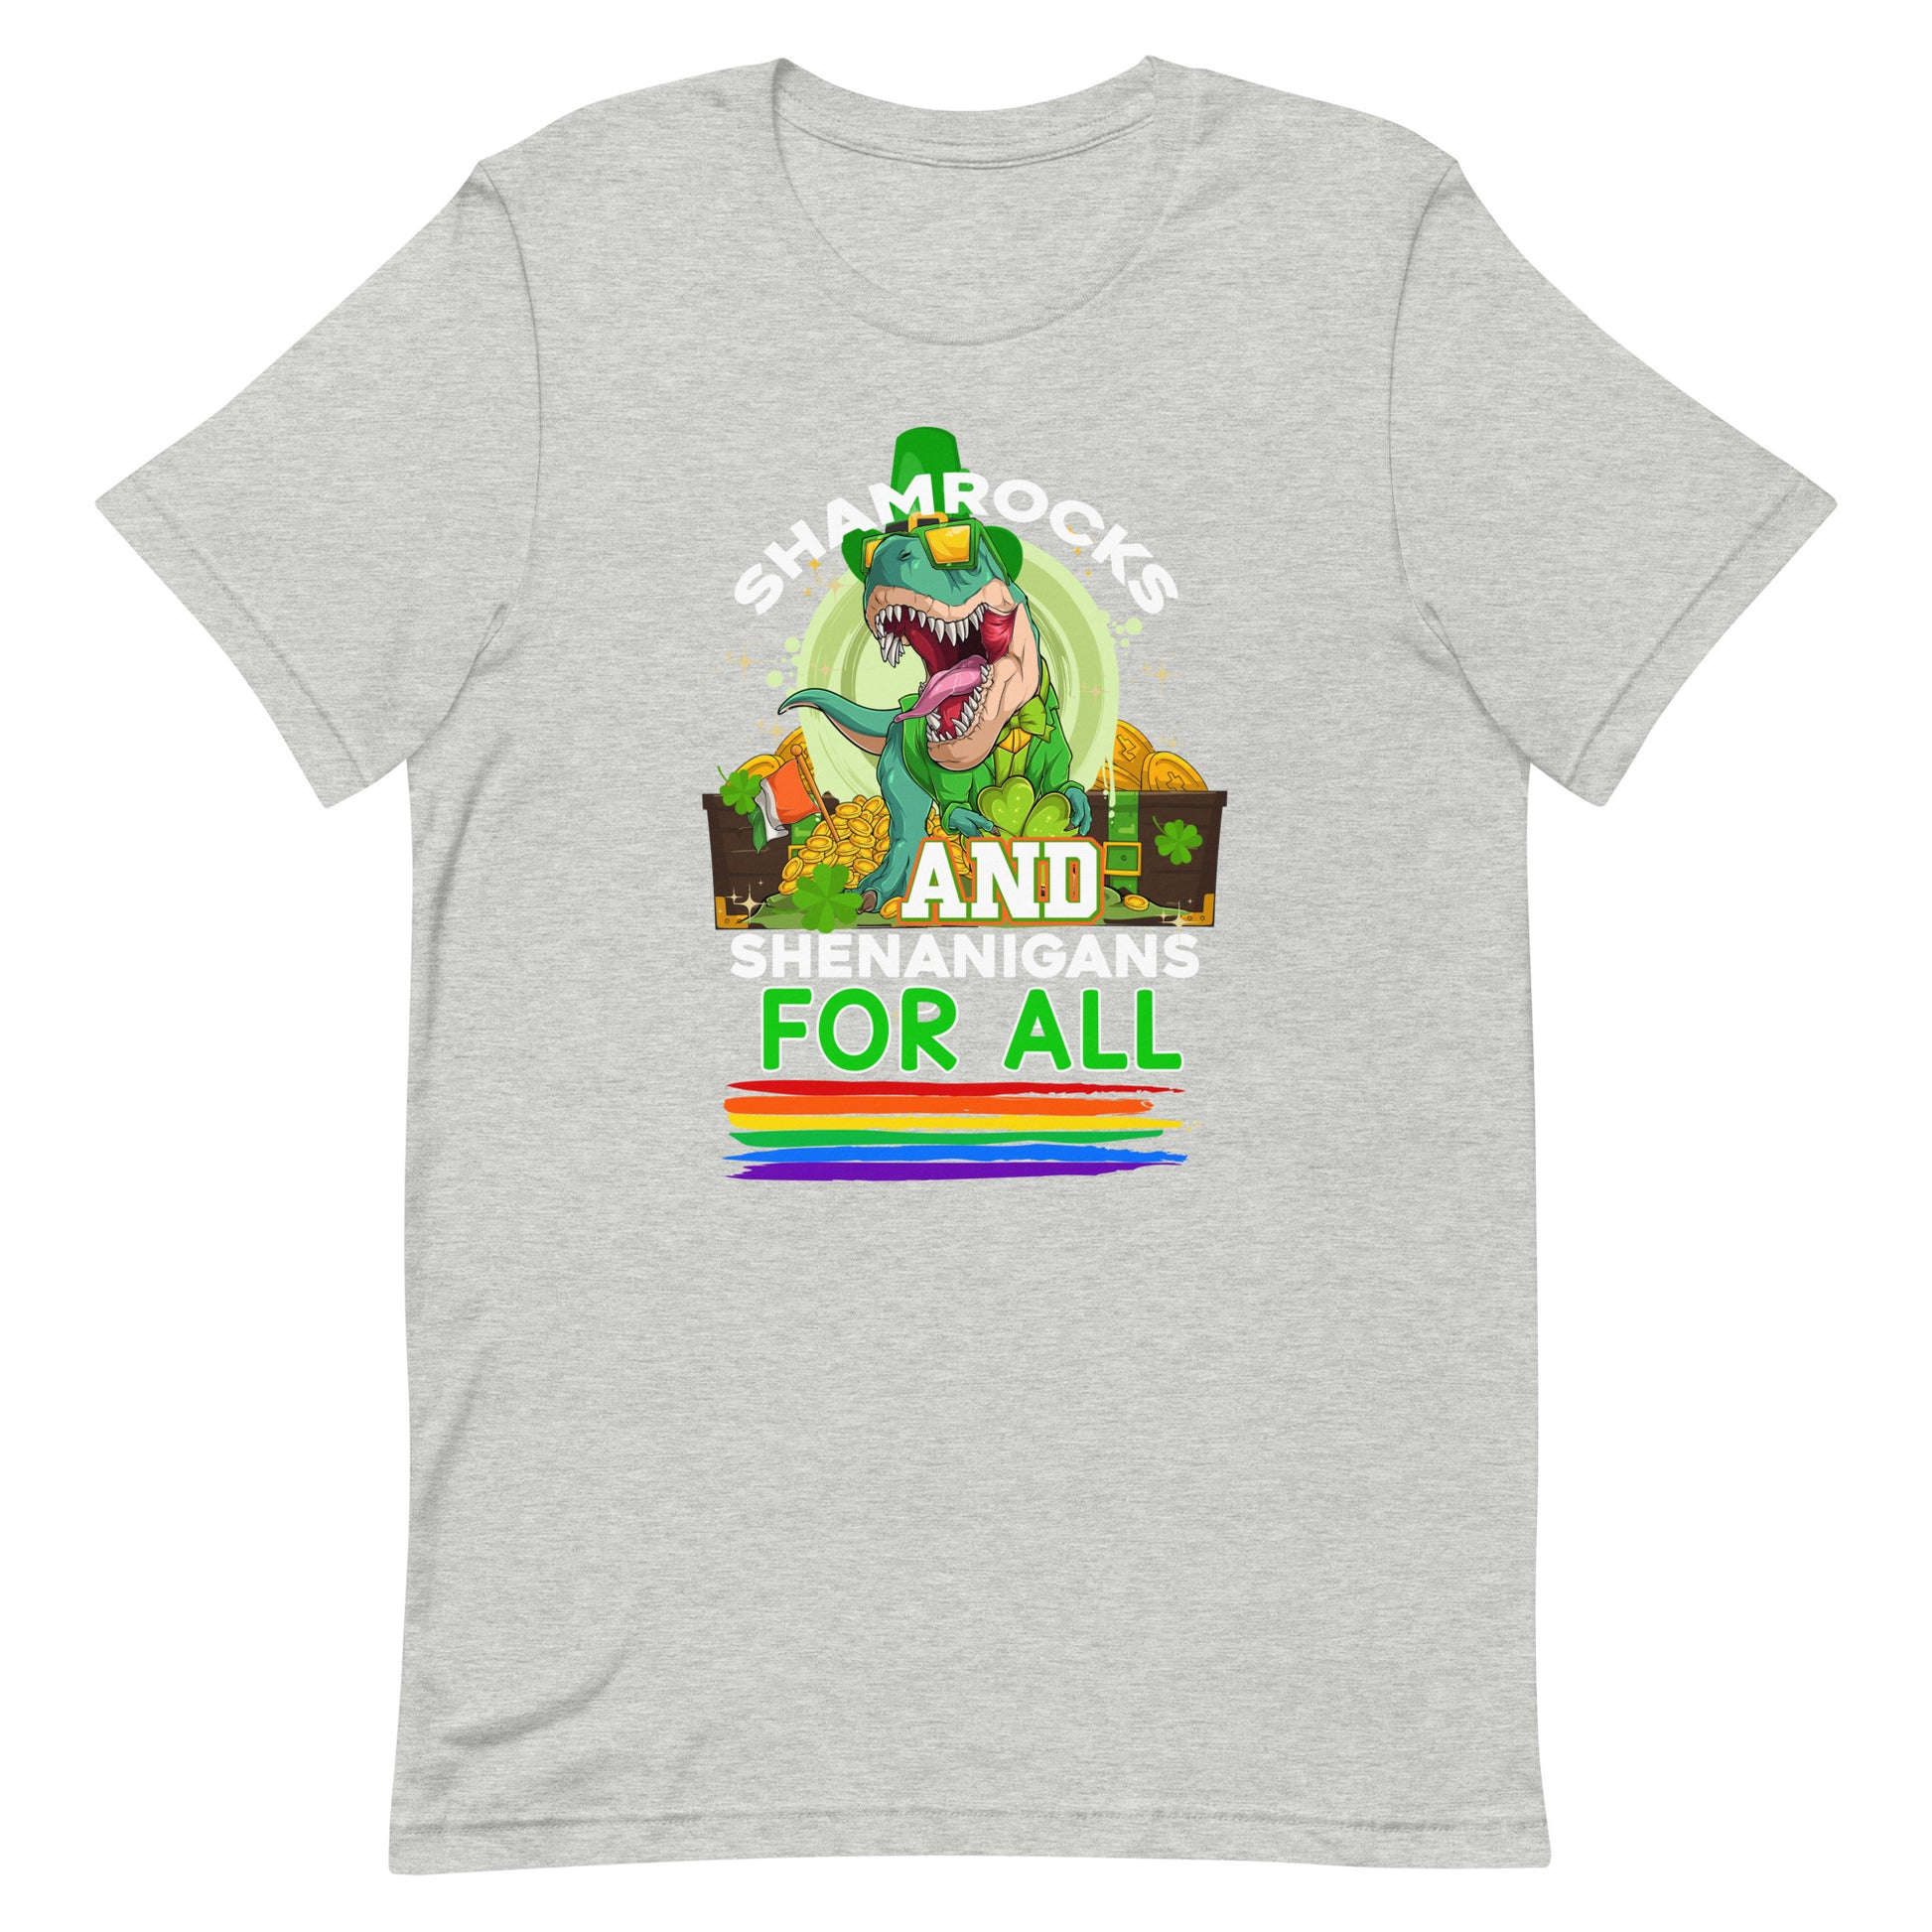 Shamrocks and Shenanigans For All Pride T-Shirt - gay pride apparel